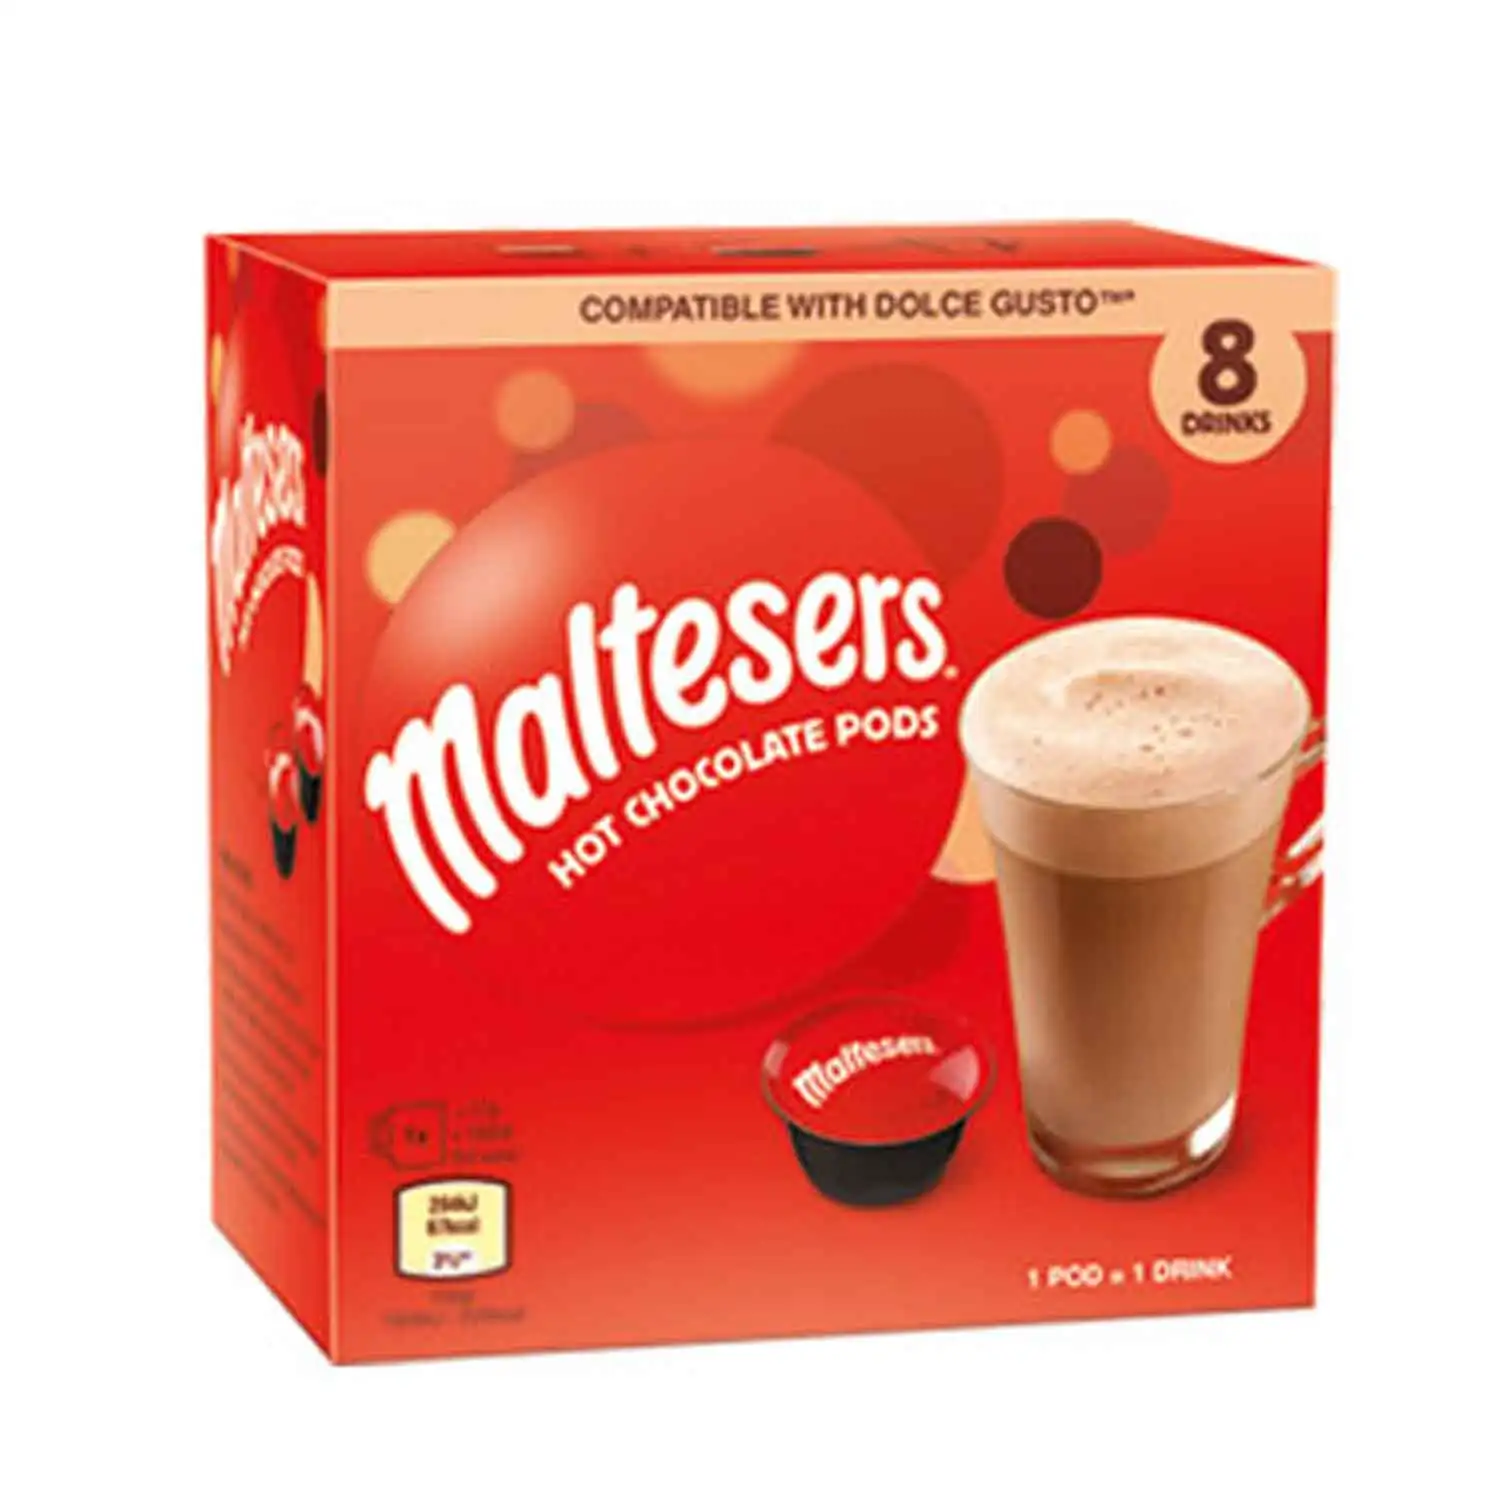 Maltesers hot chocolate pods 8x17g - Buy at Real Tobacco